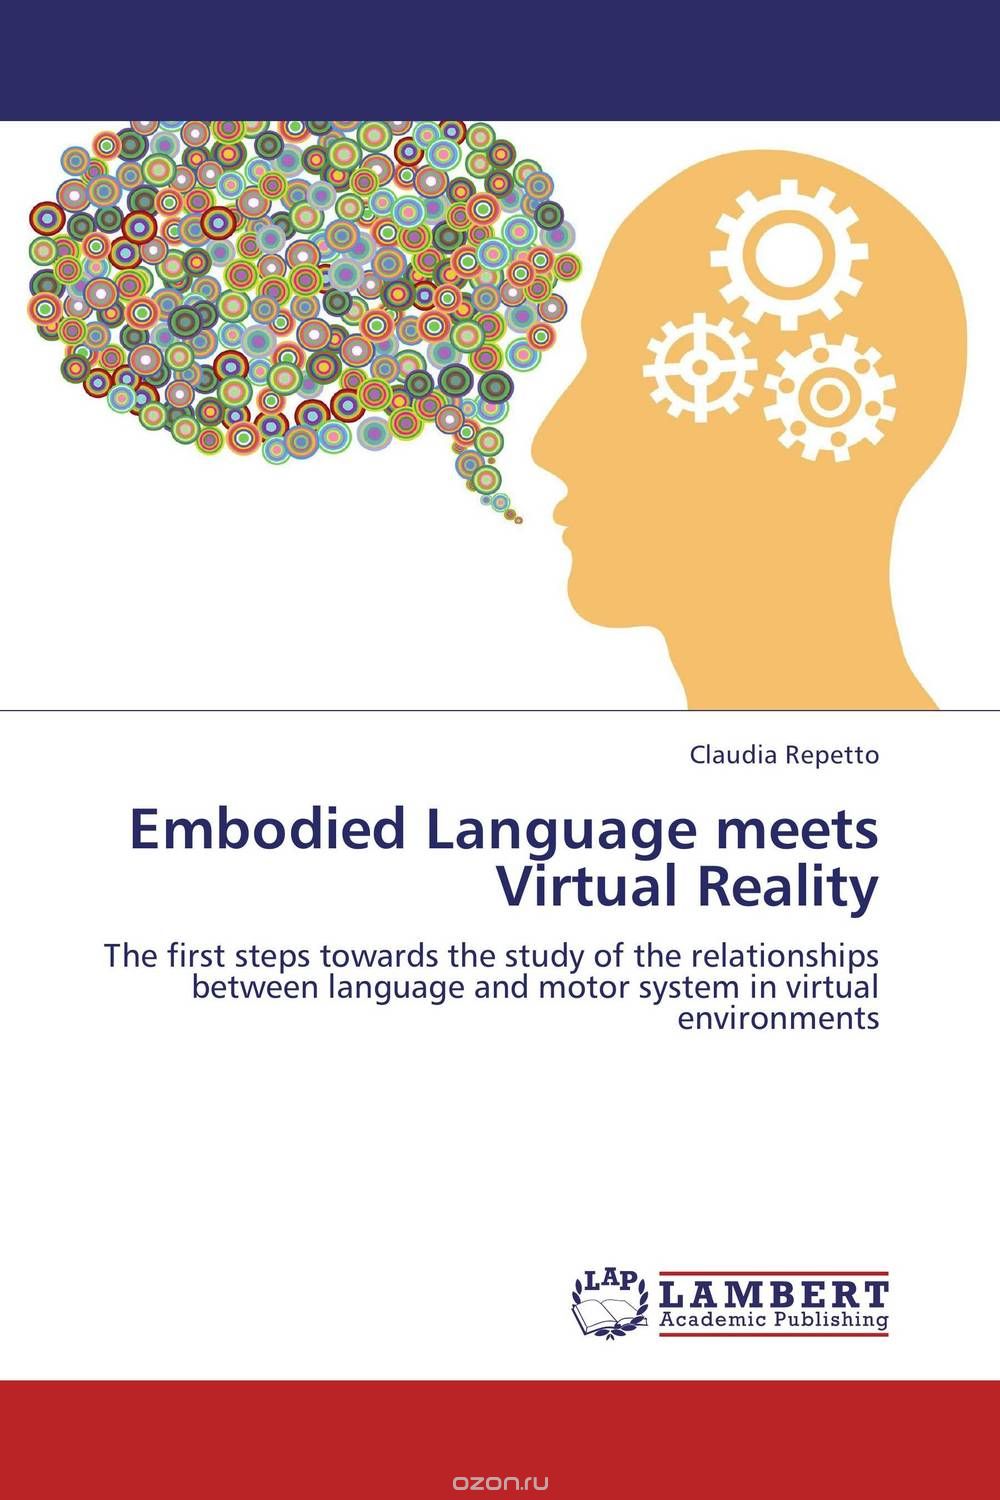 Скачать книгу "Embodied Language meets Virtual Reality"